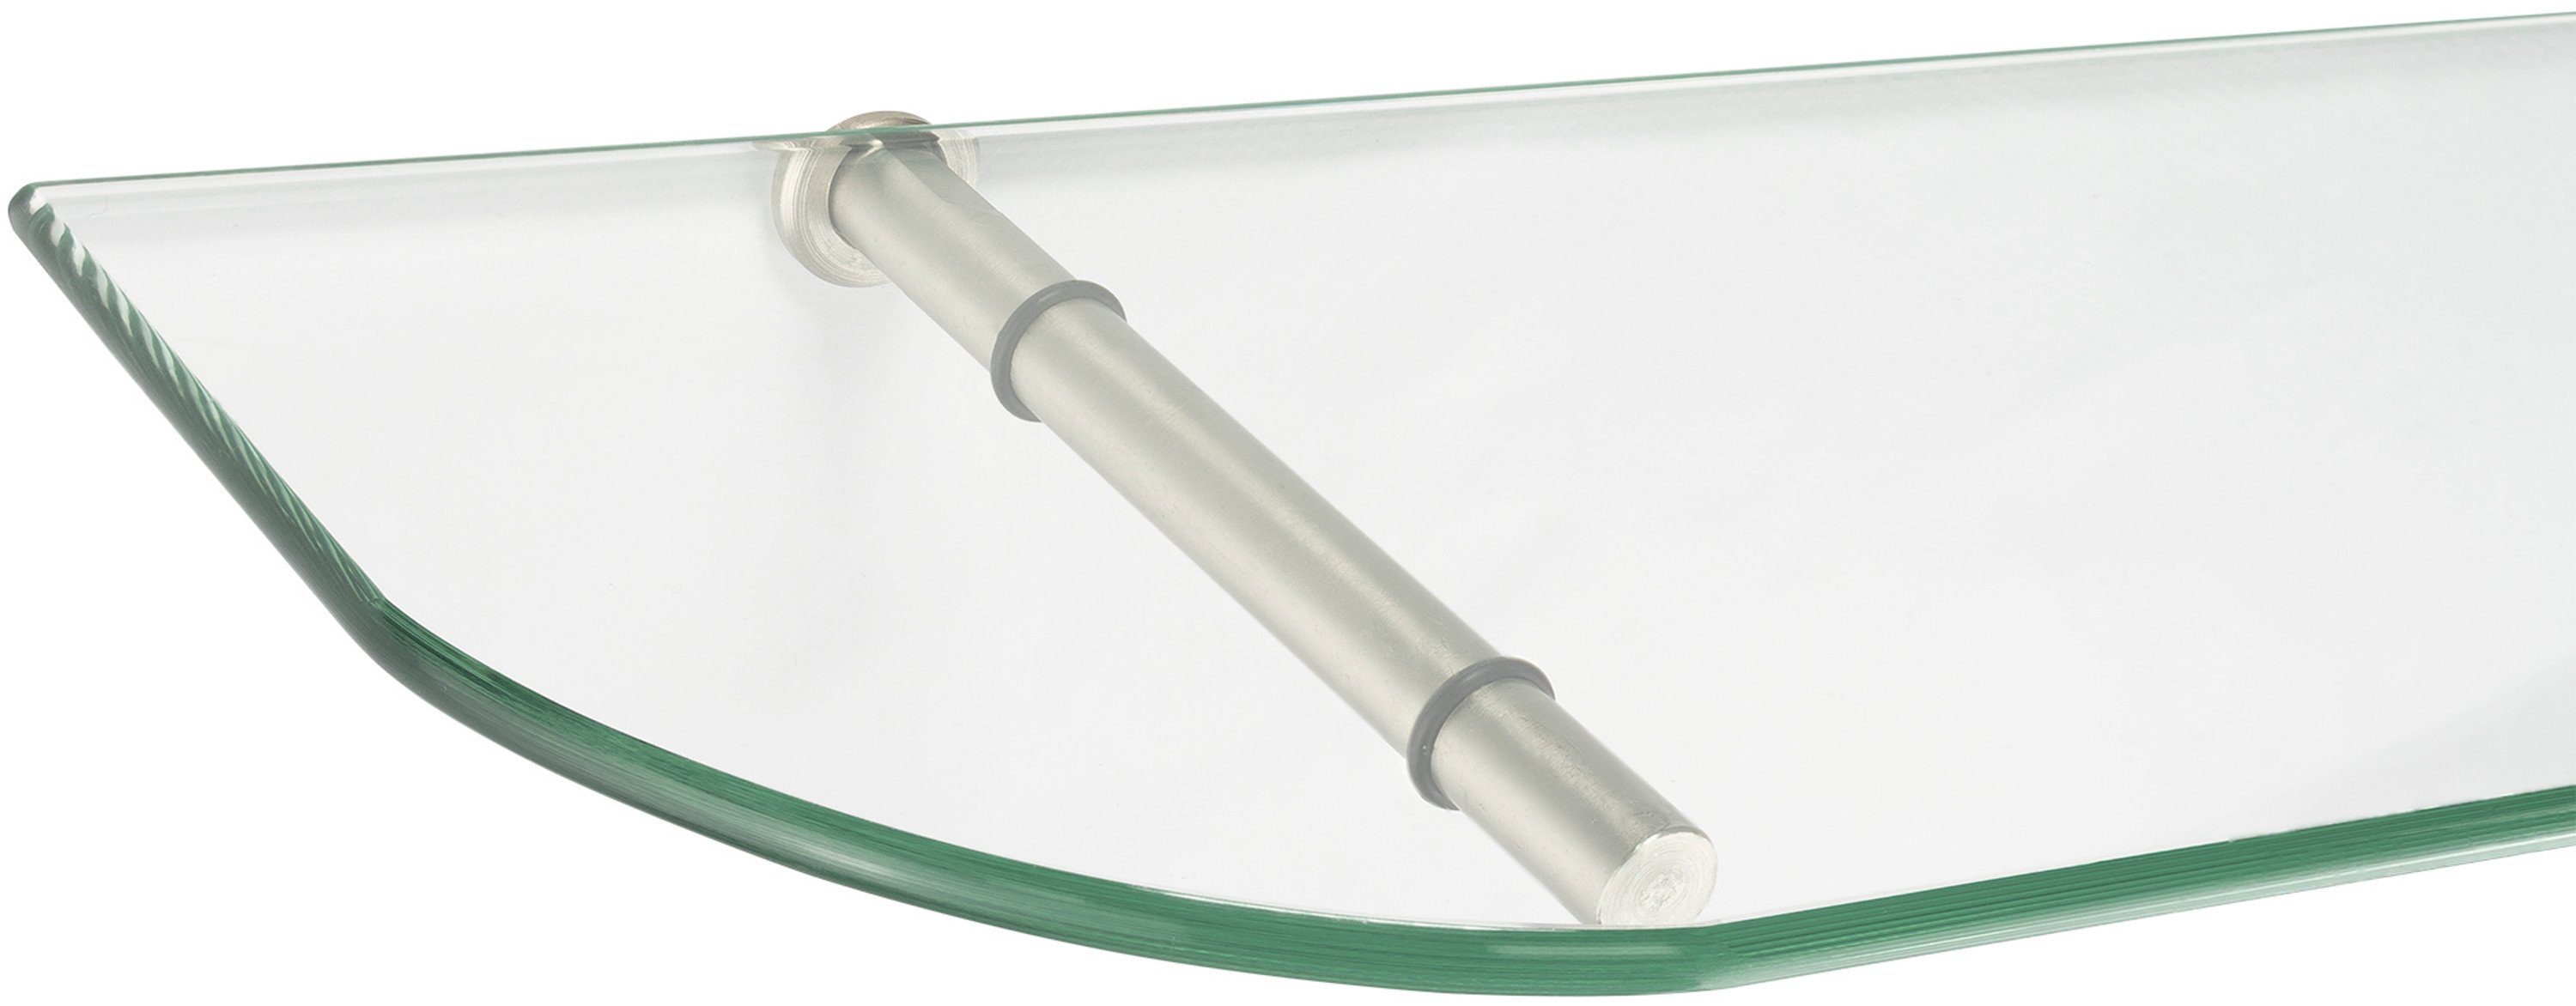 ib style Wandregal Glasregal 6mm klar 40 x 15 cm + STICK, Glasboden aus ESG-Sicherheitsglas - Wandregal